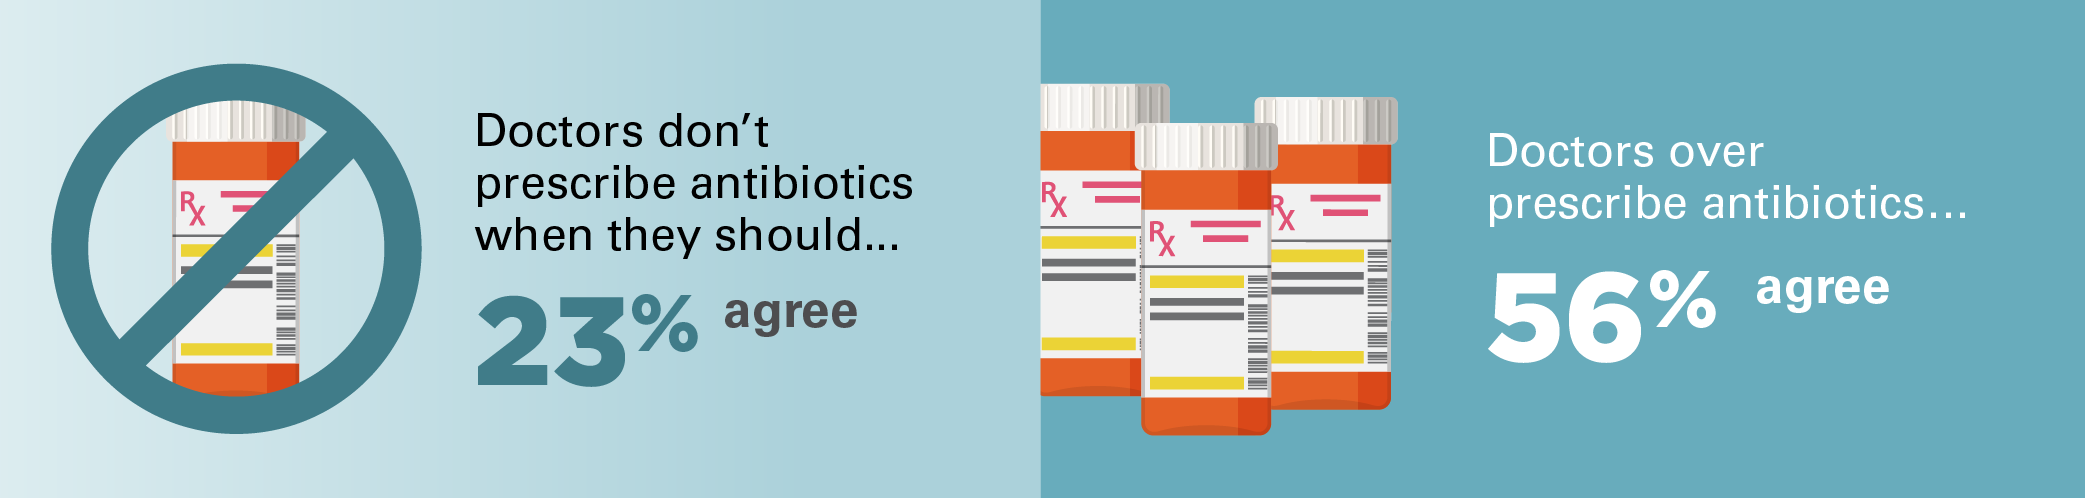 Twenty-three percent agree doctors don’t prescribe antibiotics when they should. Fifty-six agree doctors over prescribe antibiotics.